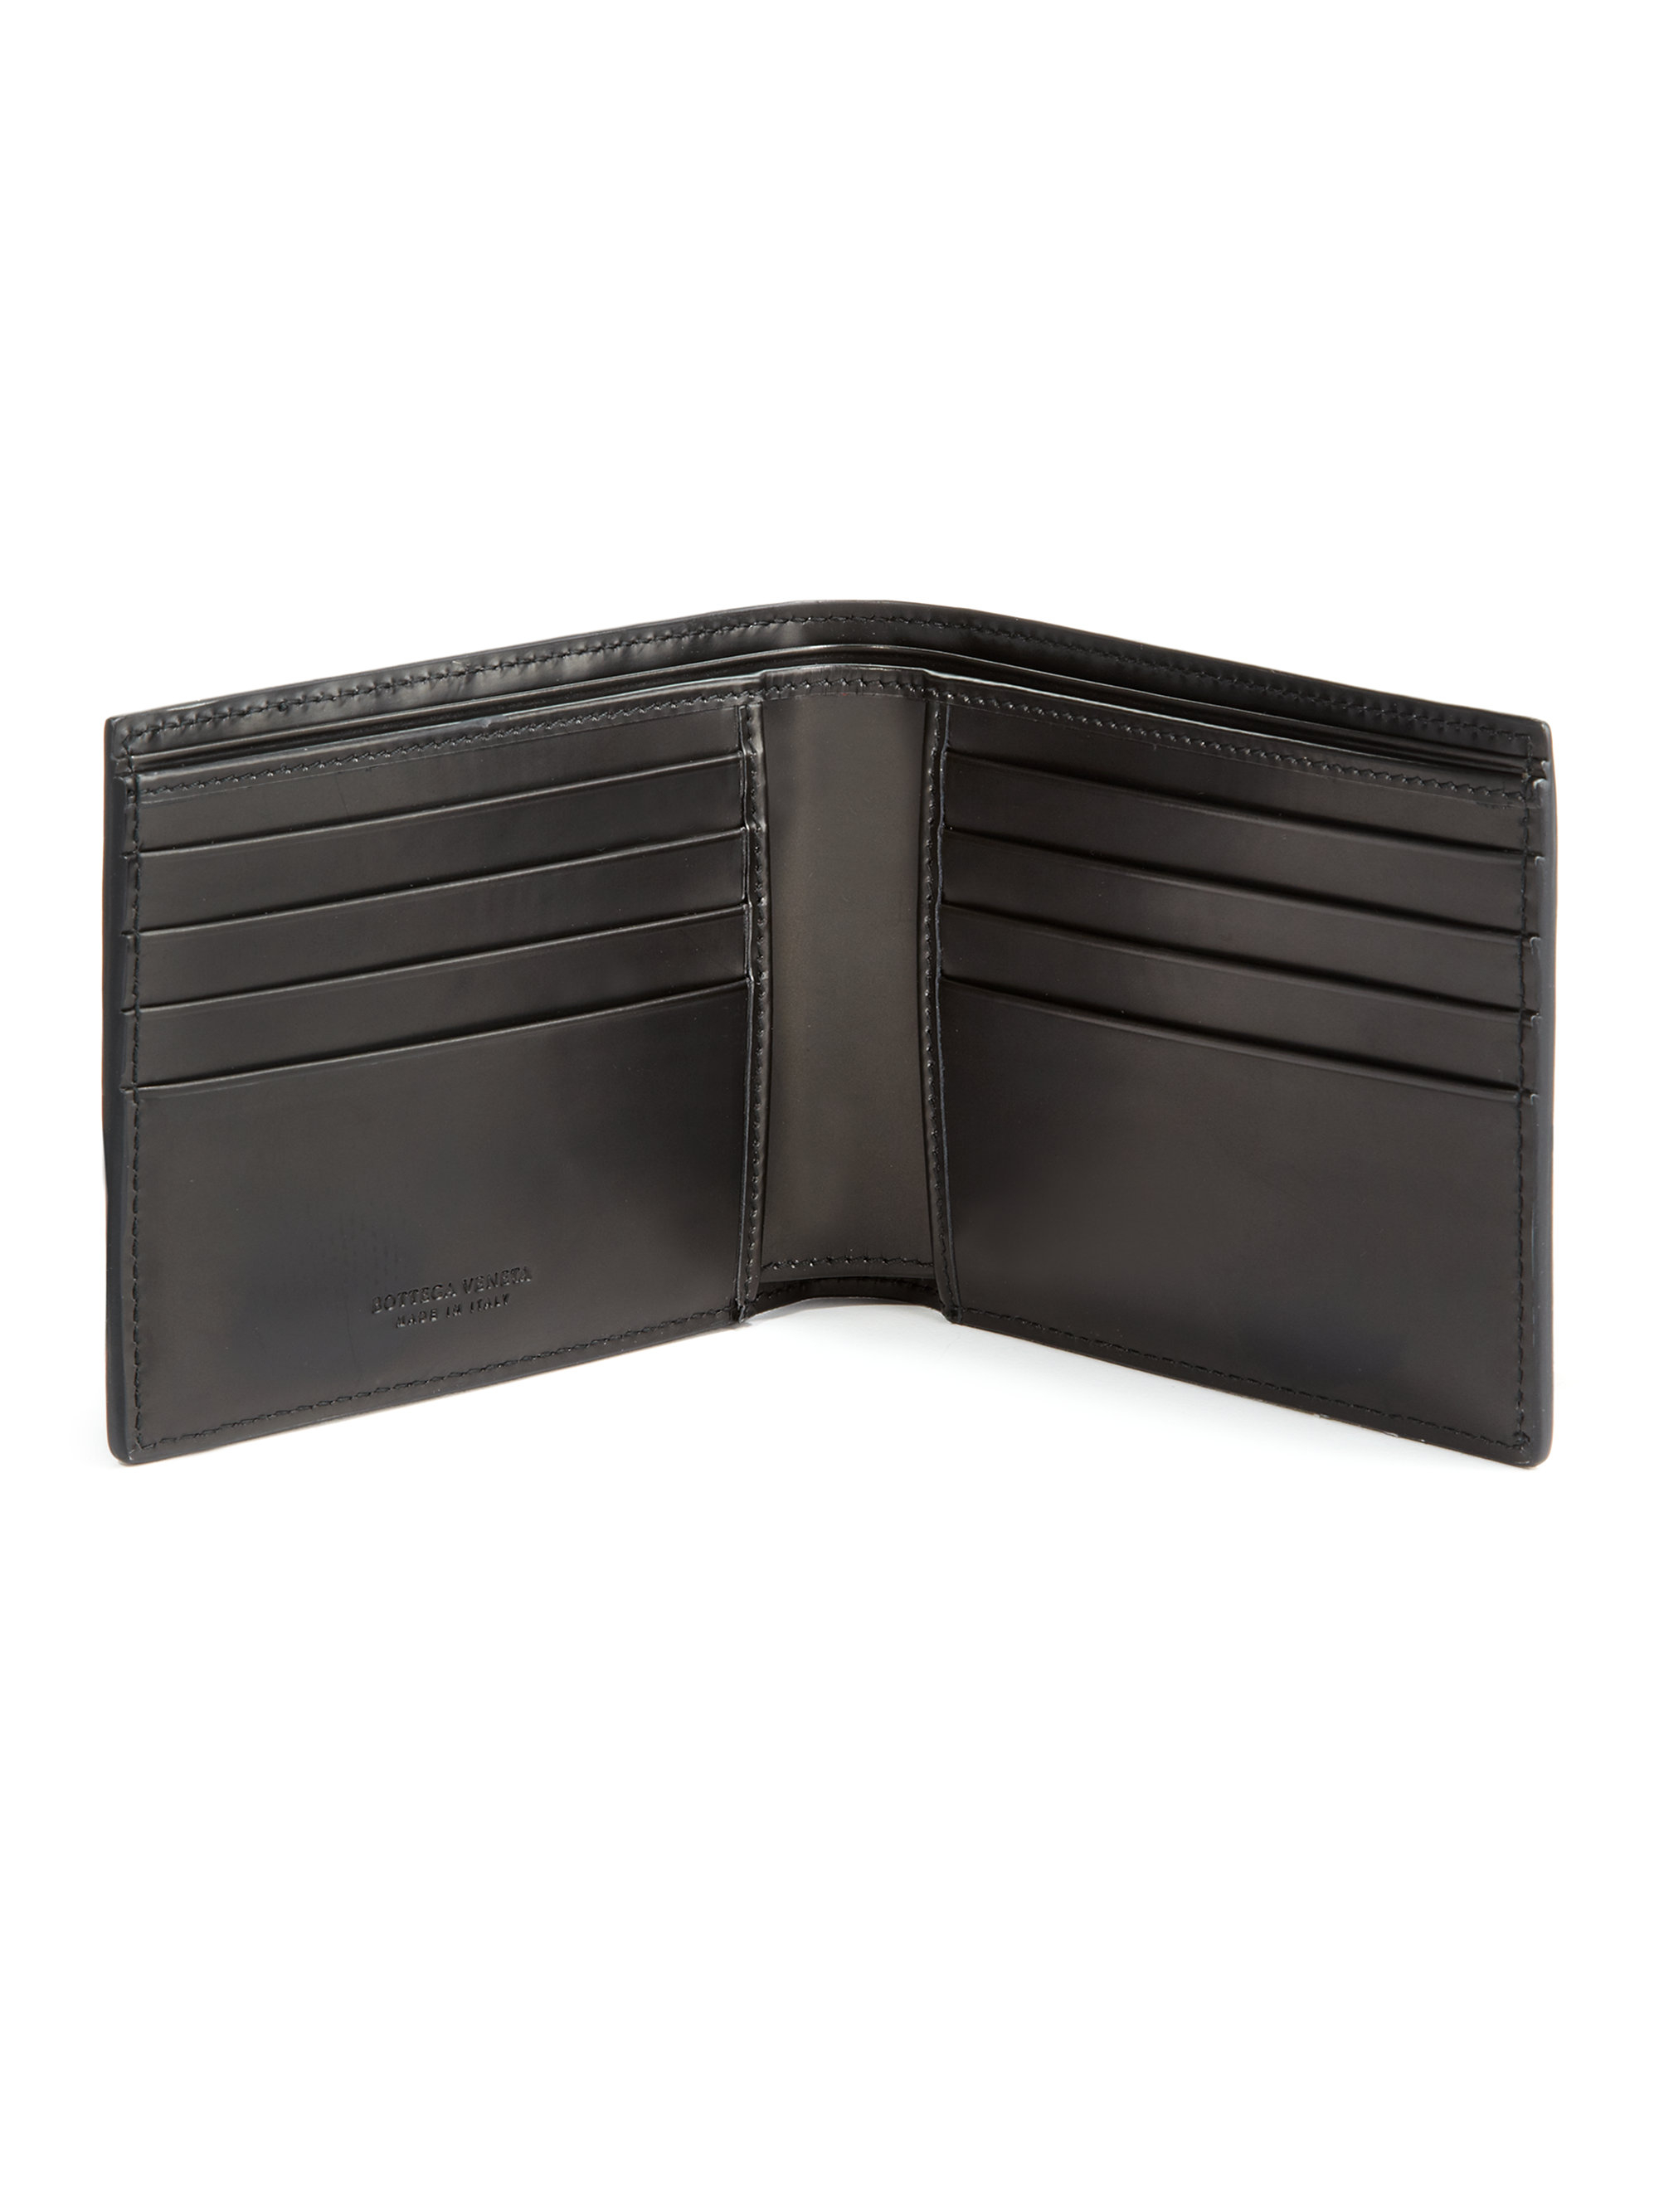 Lyst - Bottega veneta Intreccio Leather Bifold Wallet in Black for Men